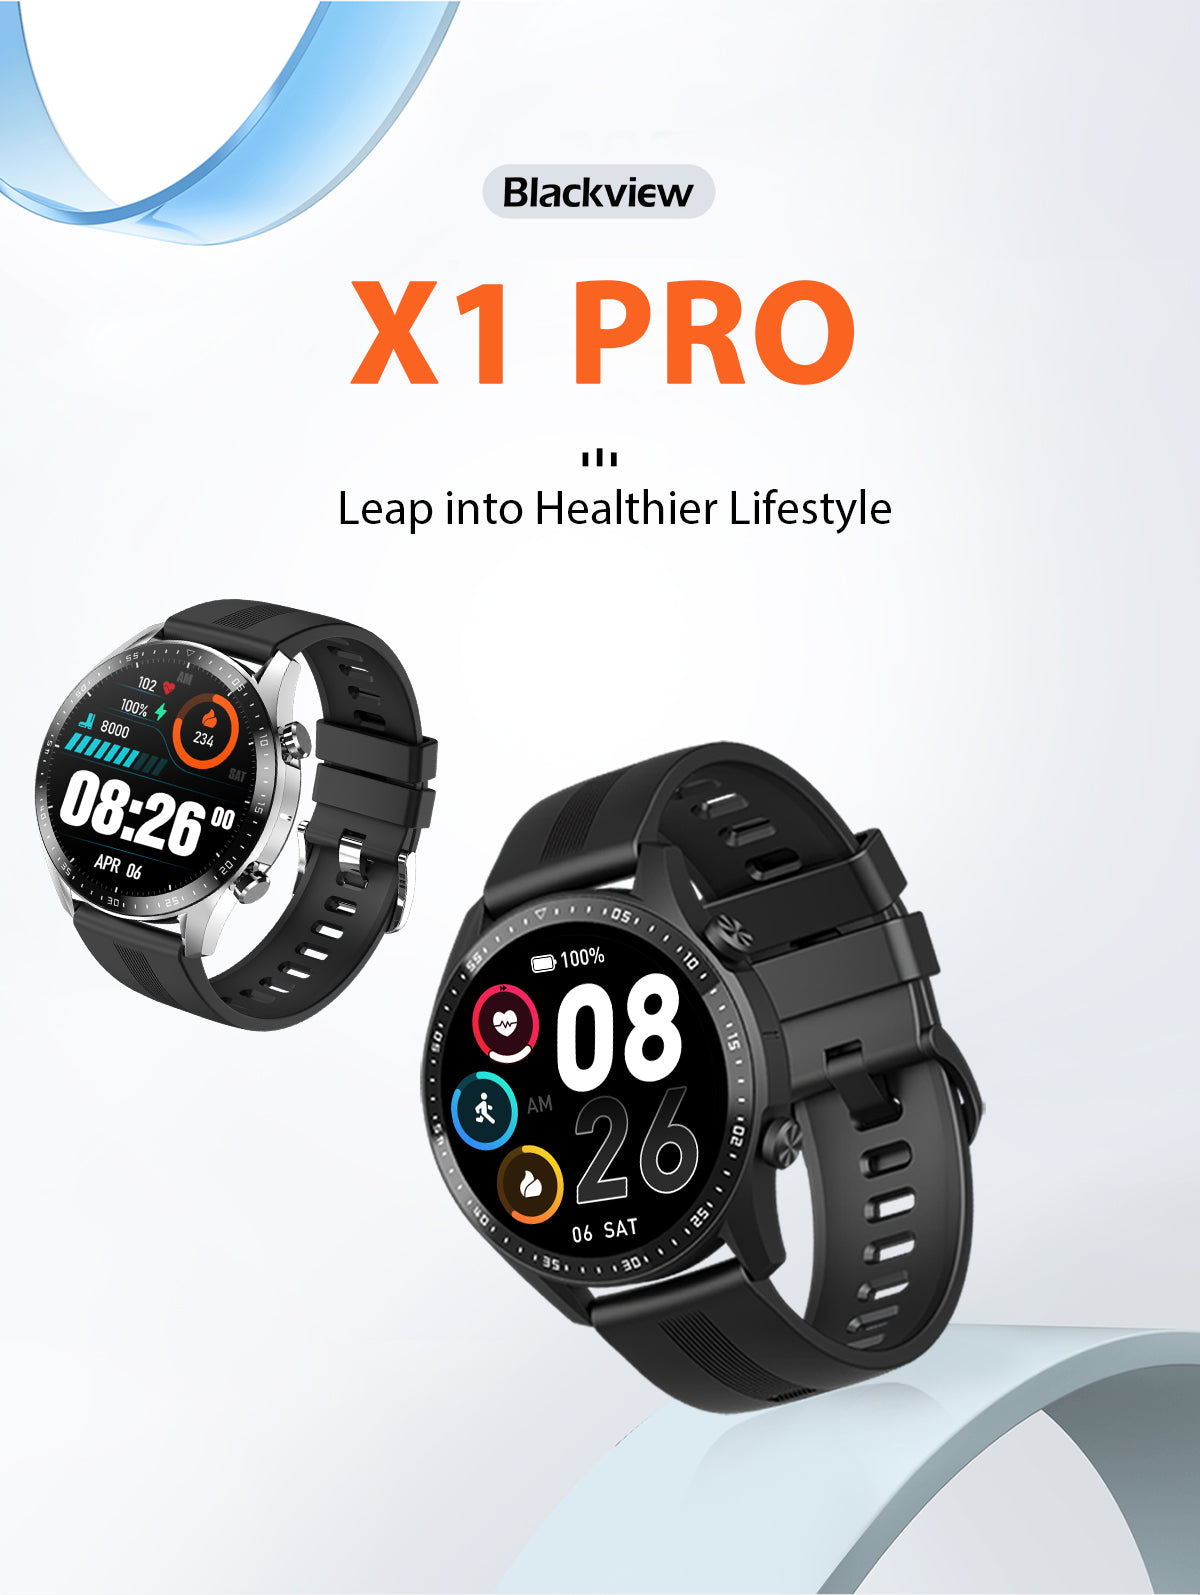 Cheap Blackview X1 Pro Smartwatch waterproof watch 1.39 inche